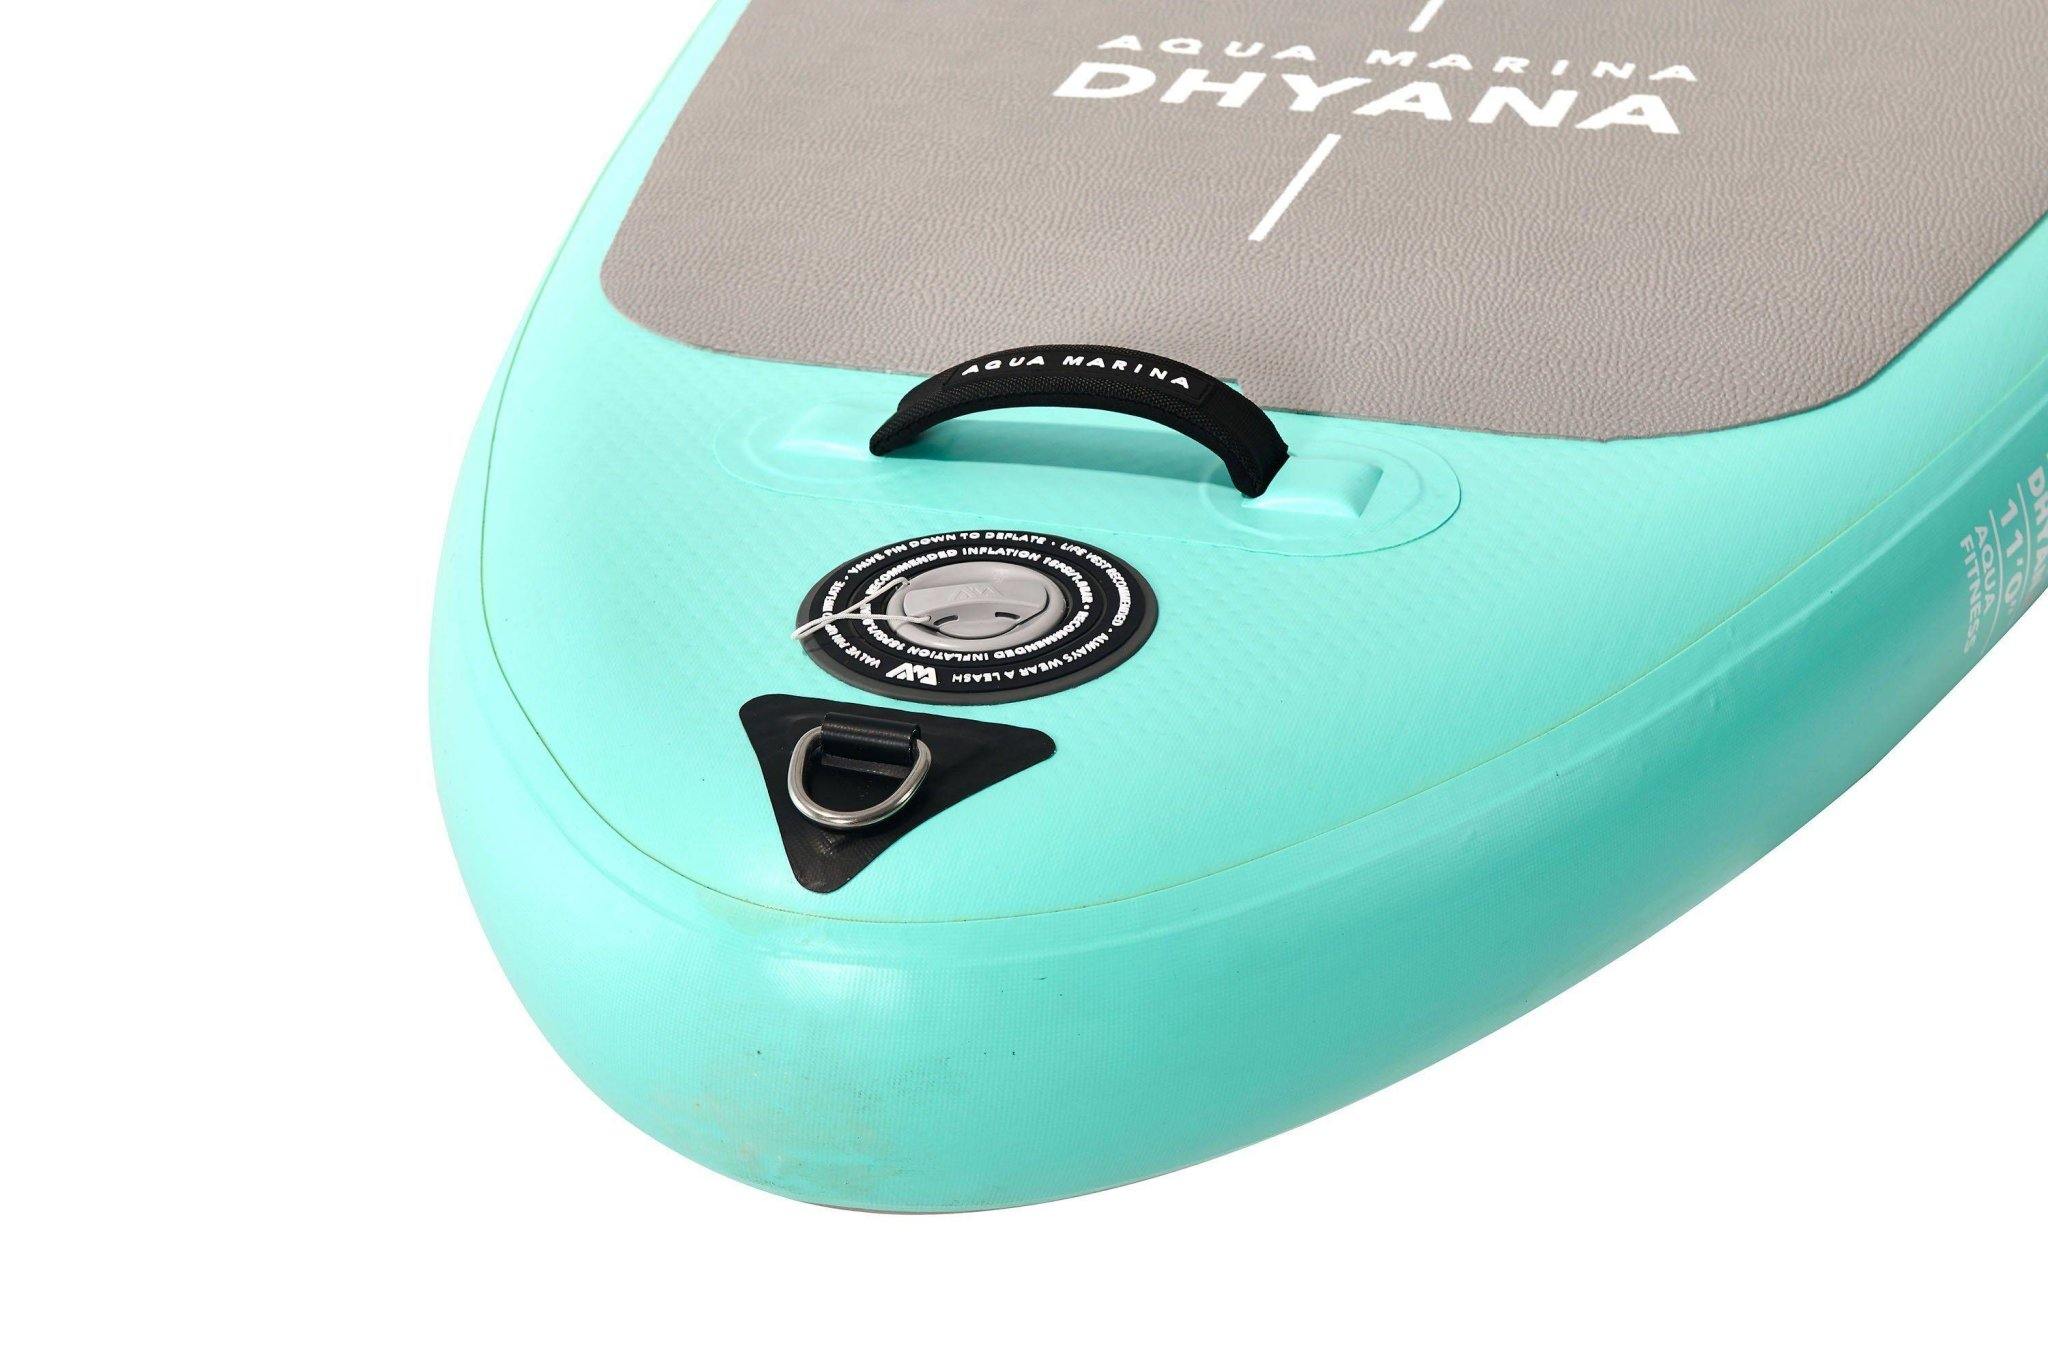 Dhyana Yoga iSUP Paddle Board - Dti Direct USA